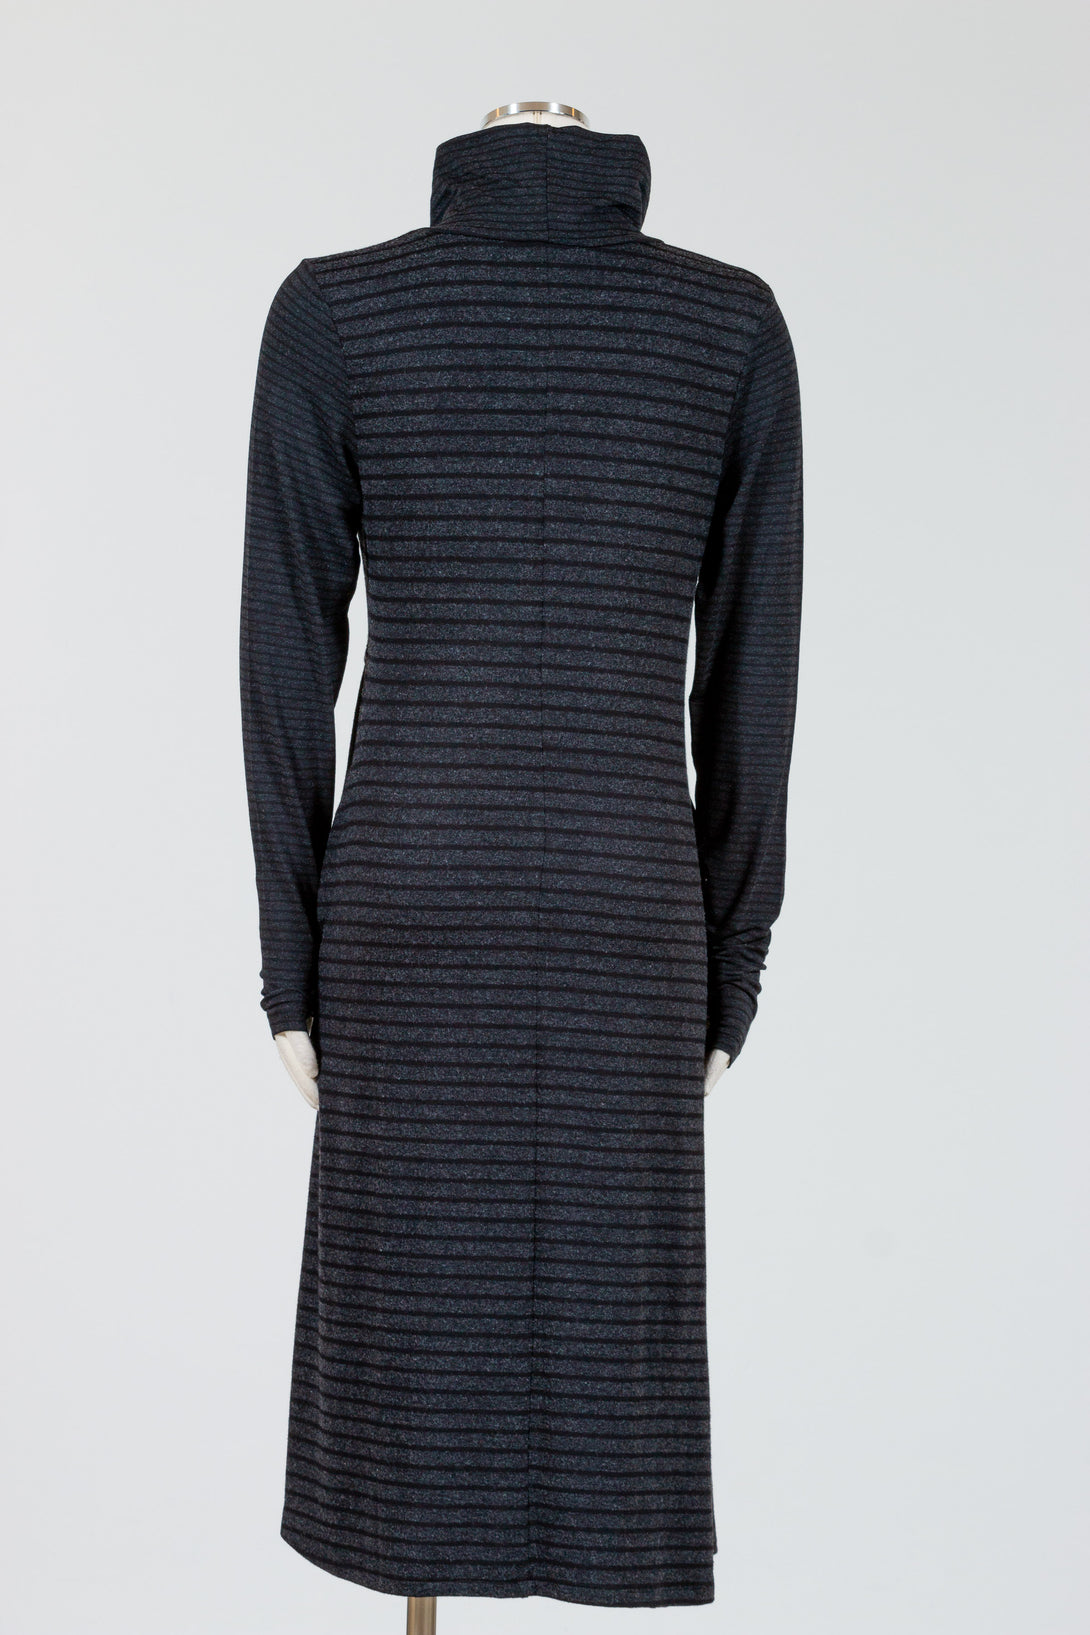 Kozan-Juniper-Dress-Jersey-Black-Grey-Stripe